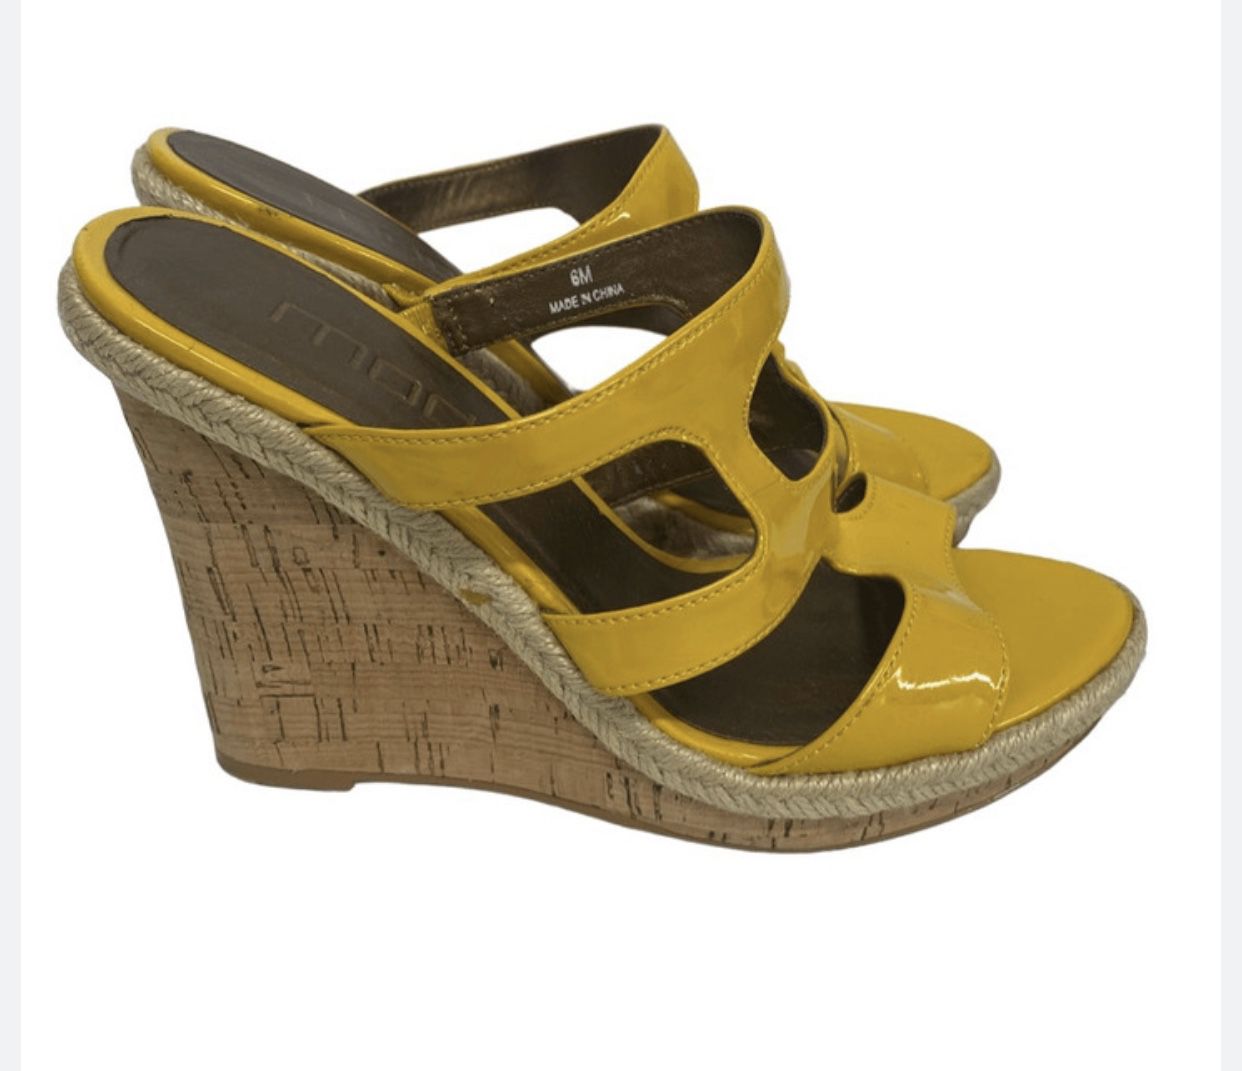 Moda Spana Yellow Platform Patent Leather Wedge Espadrilles Sandals, size 7.5